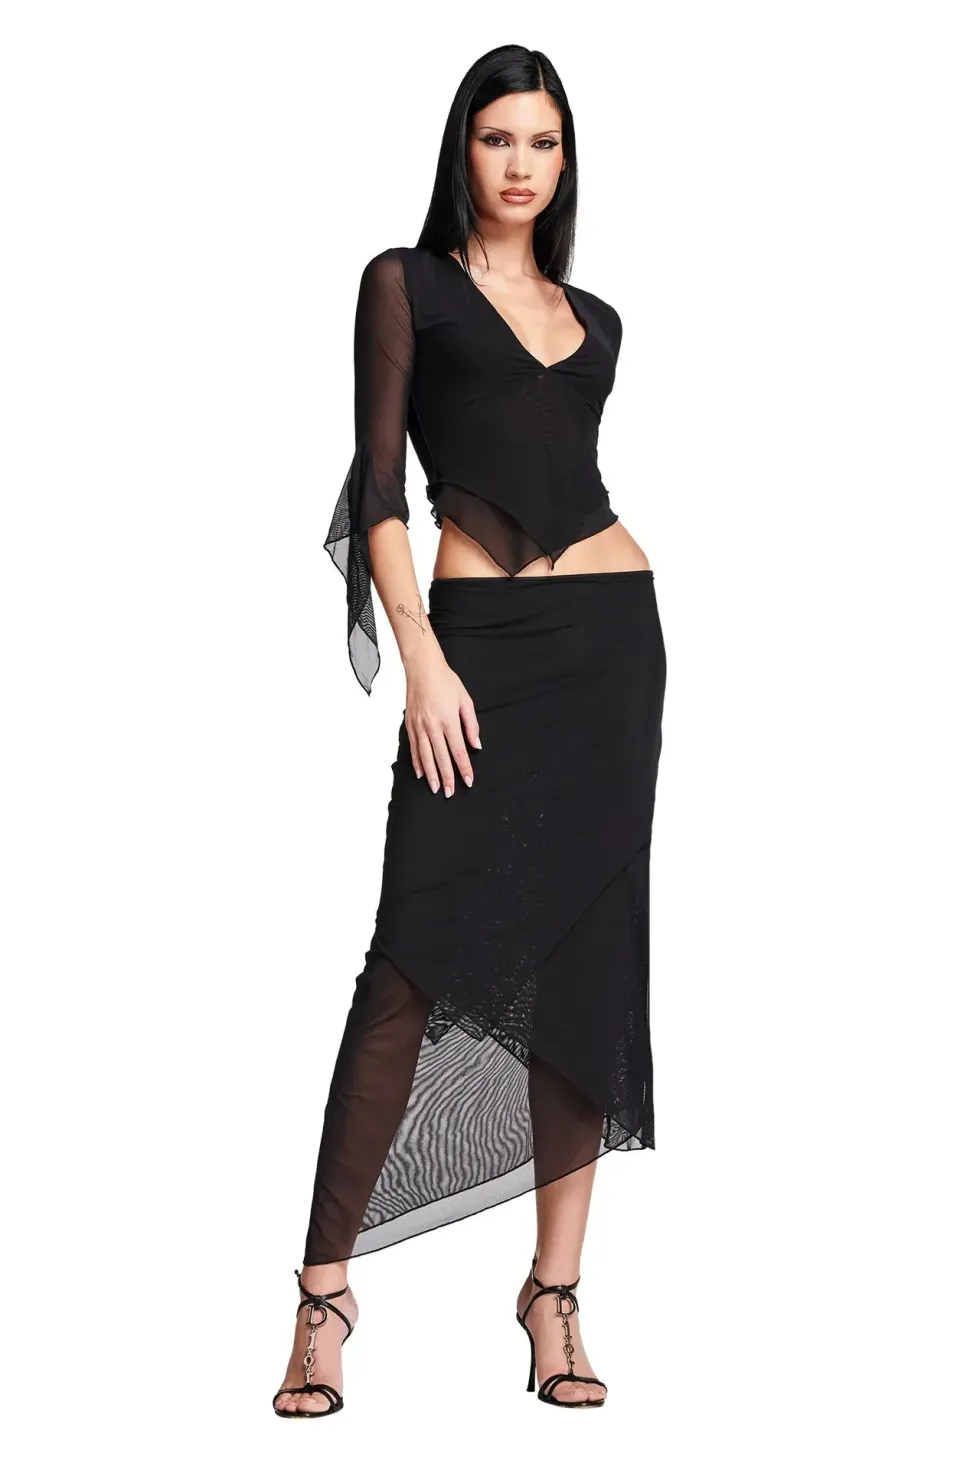 matching black top and skirt set mesh